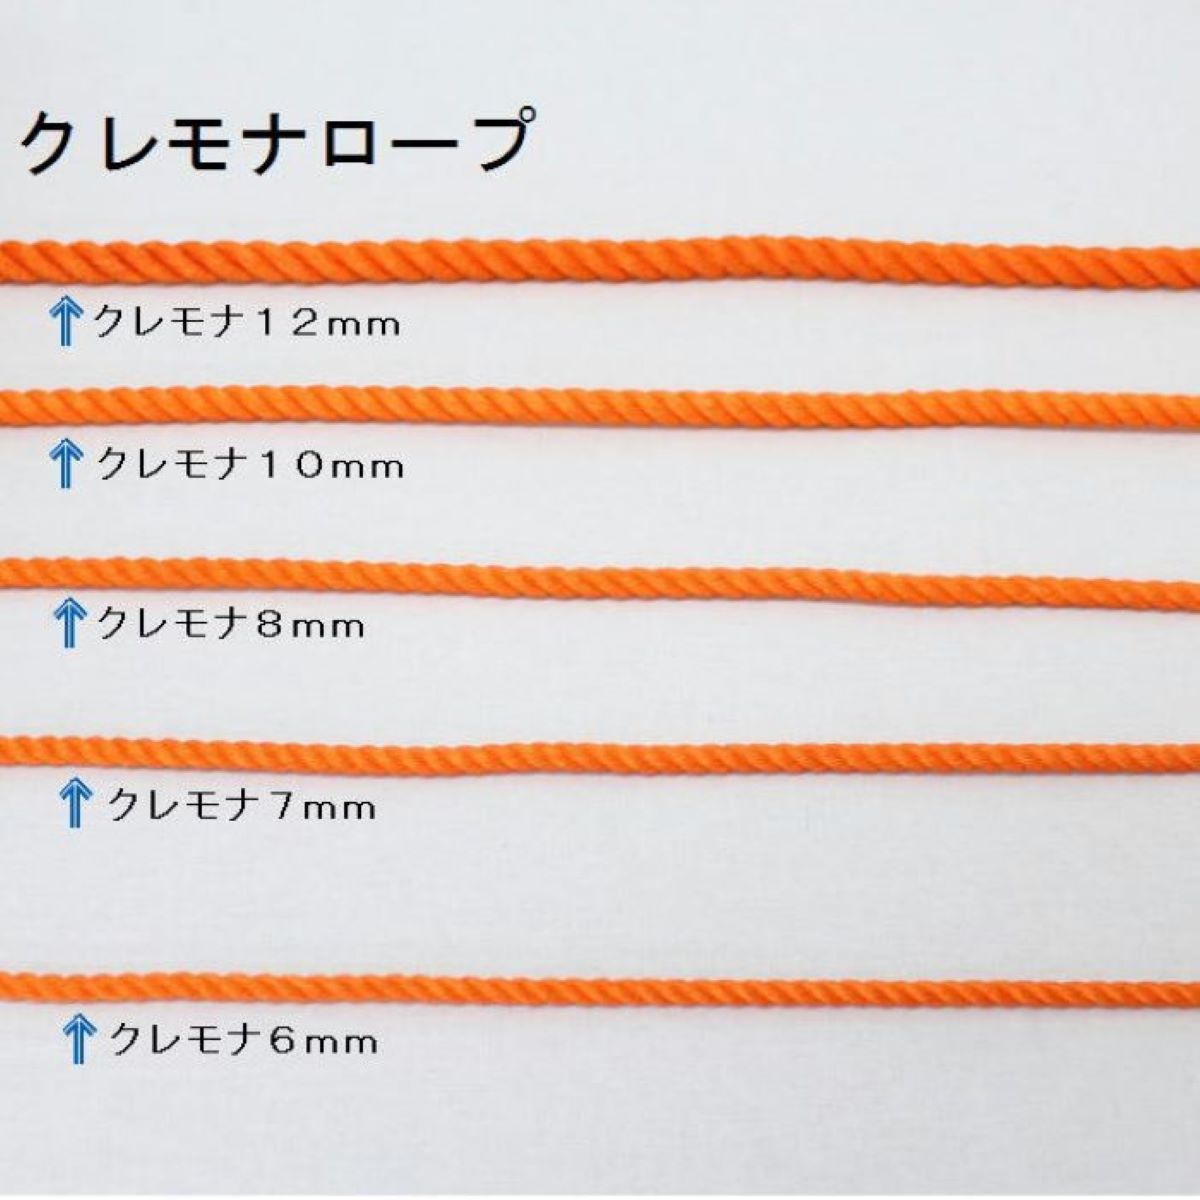 kremona rope thickness 6mm orange *..*. futoshi hand drum * cord . for rope *1m every. sale 